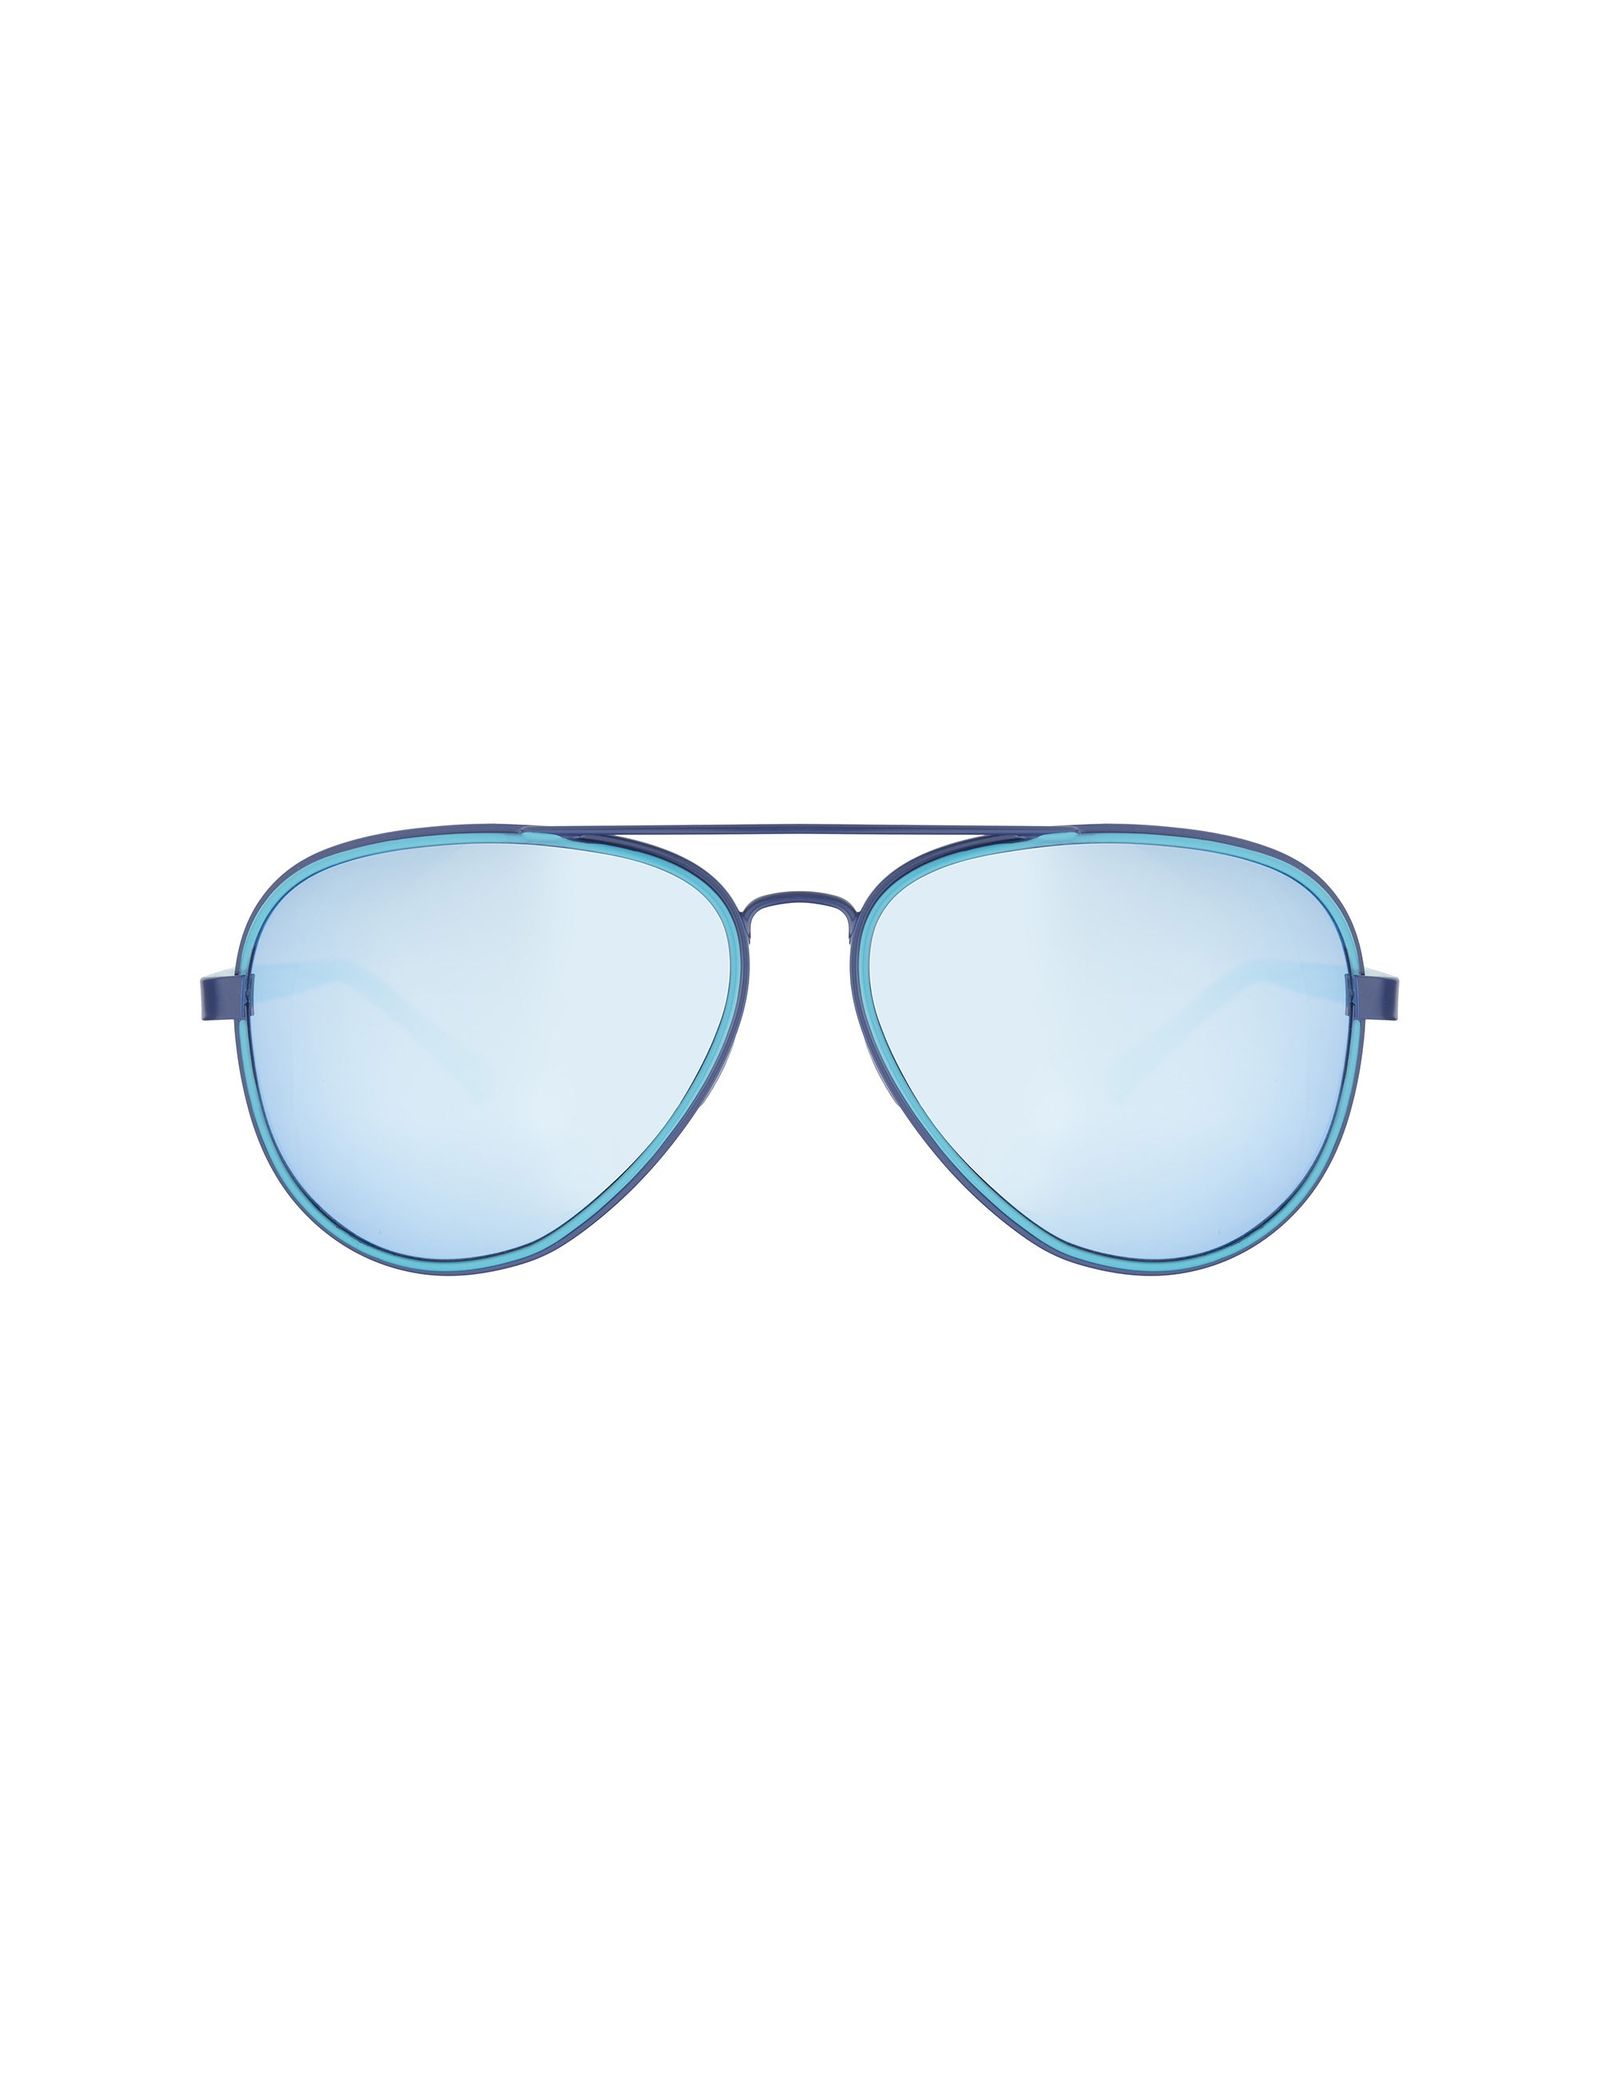 عینک آفتابی خلبانی زنانه - پپه جینز - آبي روشن - 1